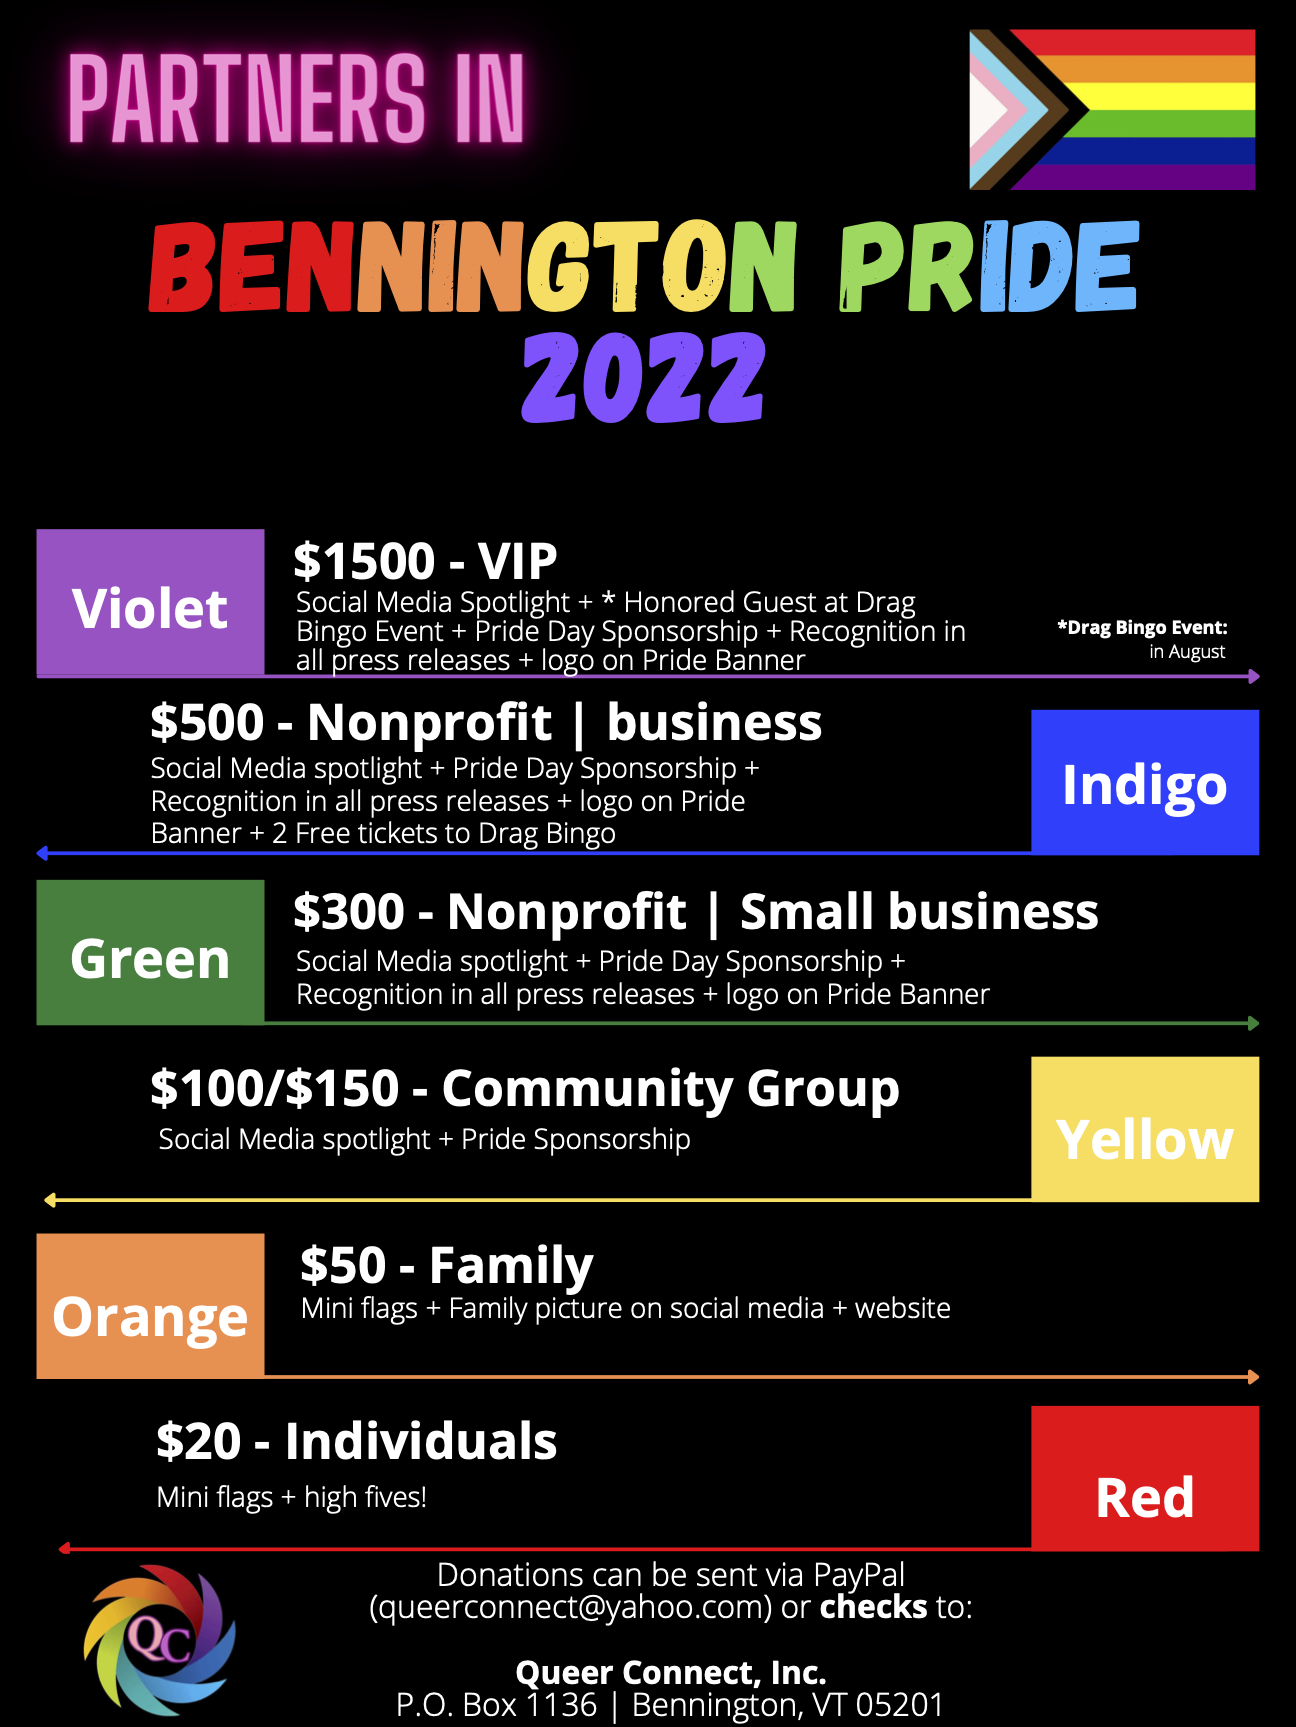 Partners in Bennington Pride 2022 partnership poster